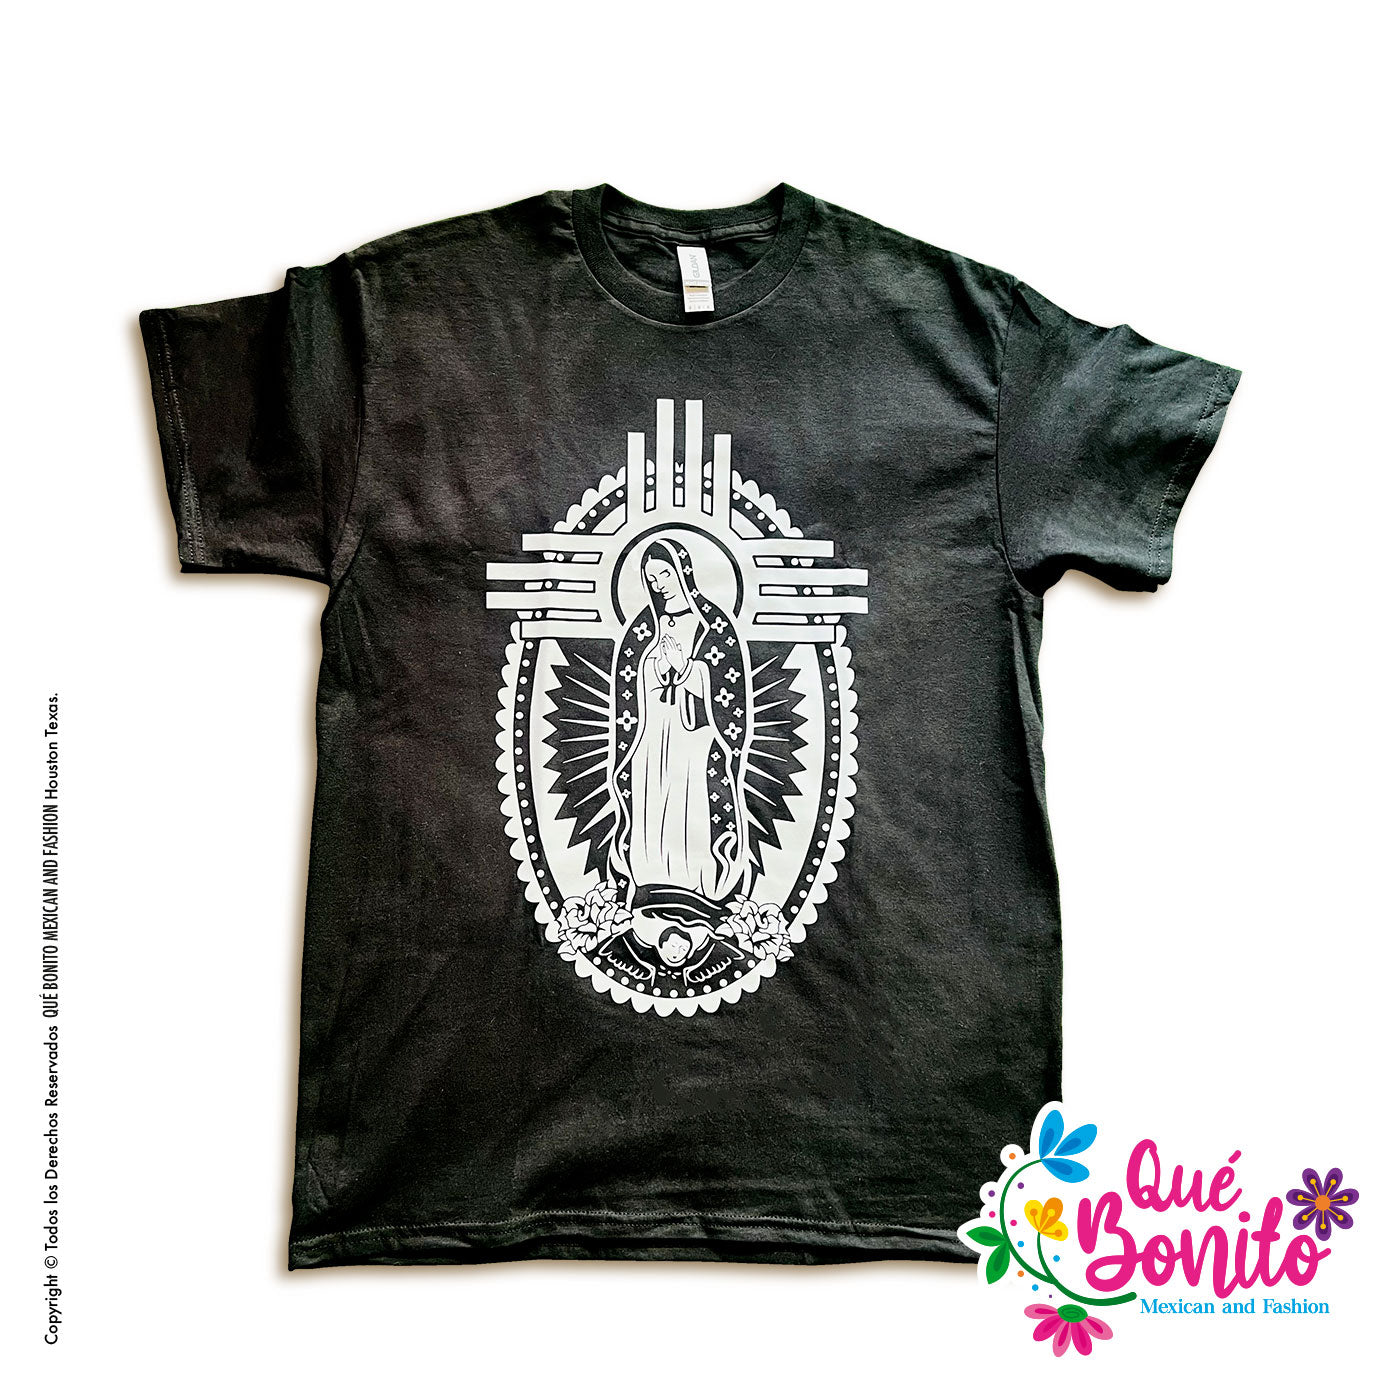 Virgen de Guadalupe Unisex T-shirt Que Bonito Mexican and Fashion